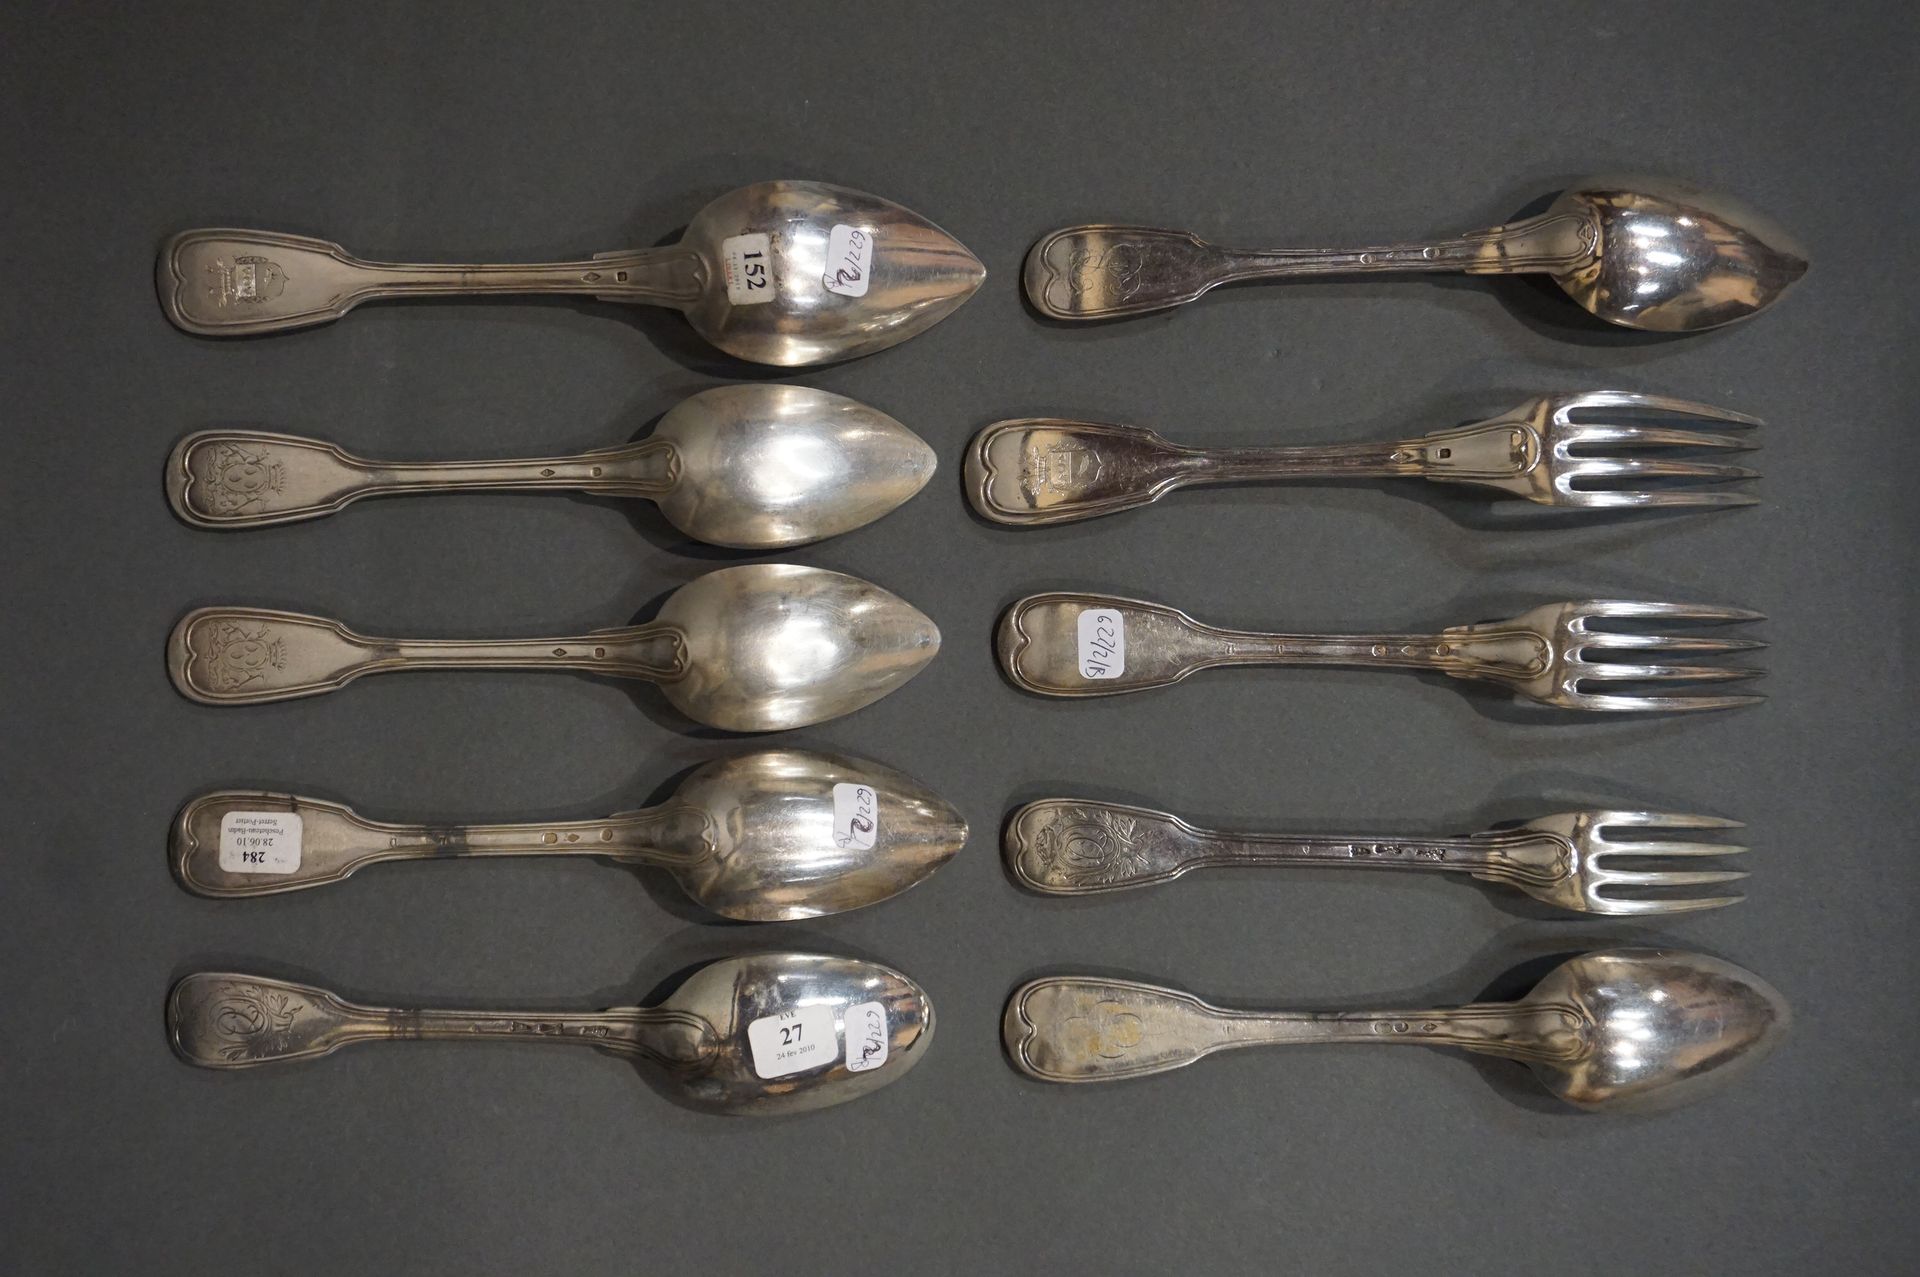 COUVERTS 七个大勺子和三个大叉子都是银制的，有的还印有图案或纪念品。标记Fermiers Généraux、Coq、Vieillard或Minerve（&hellip;